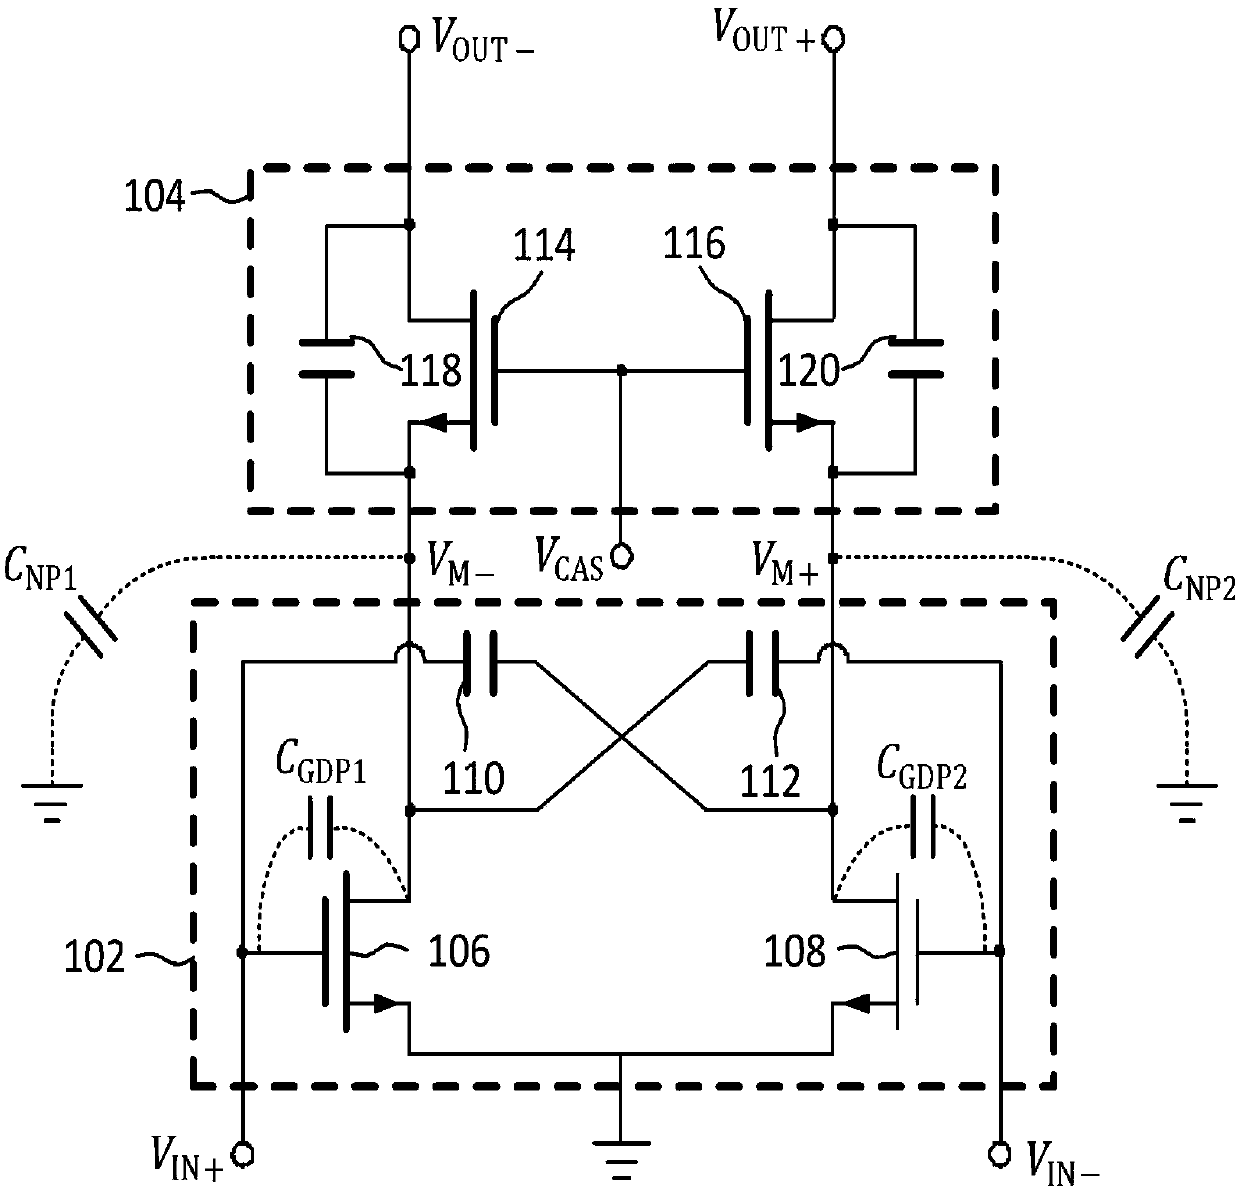 Neutralizing bootstrap cascode amplifier suitable for millimeter-wave power amplification